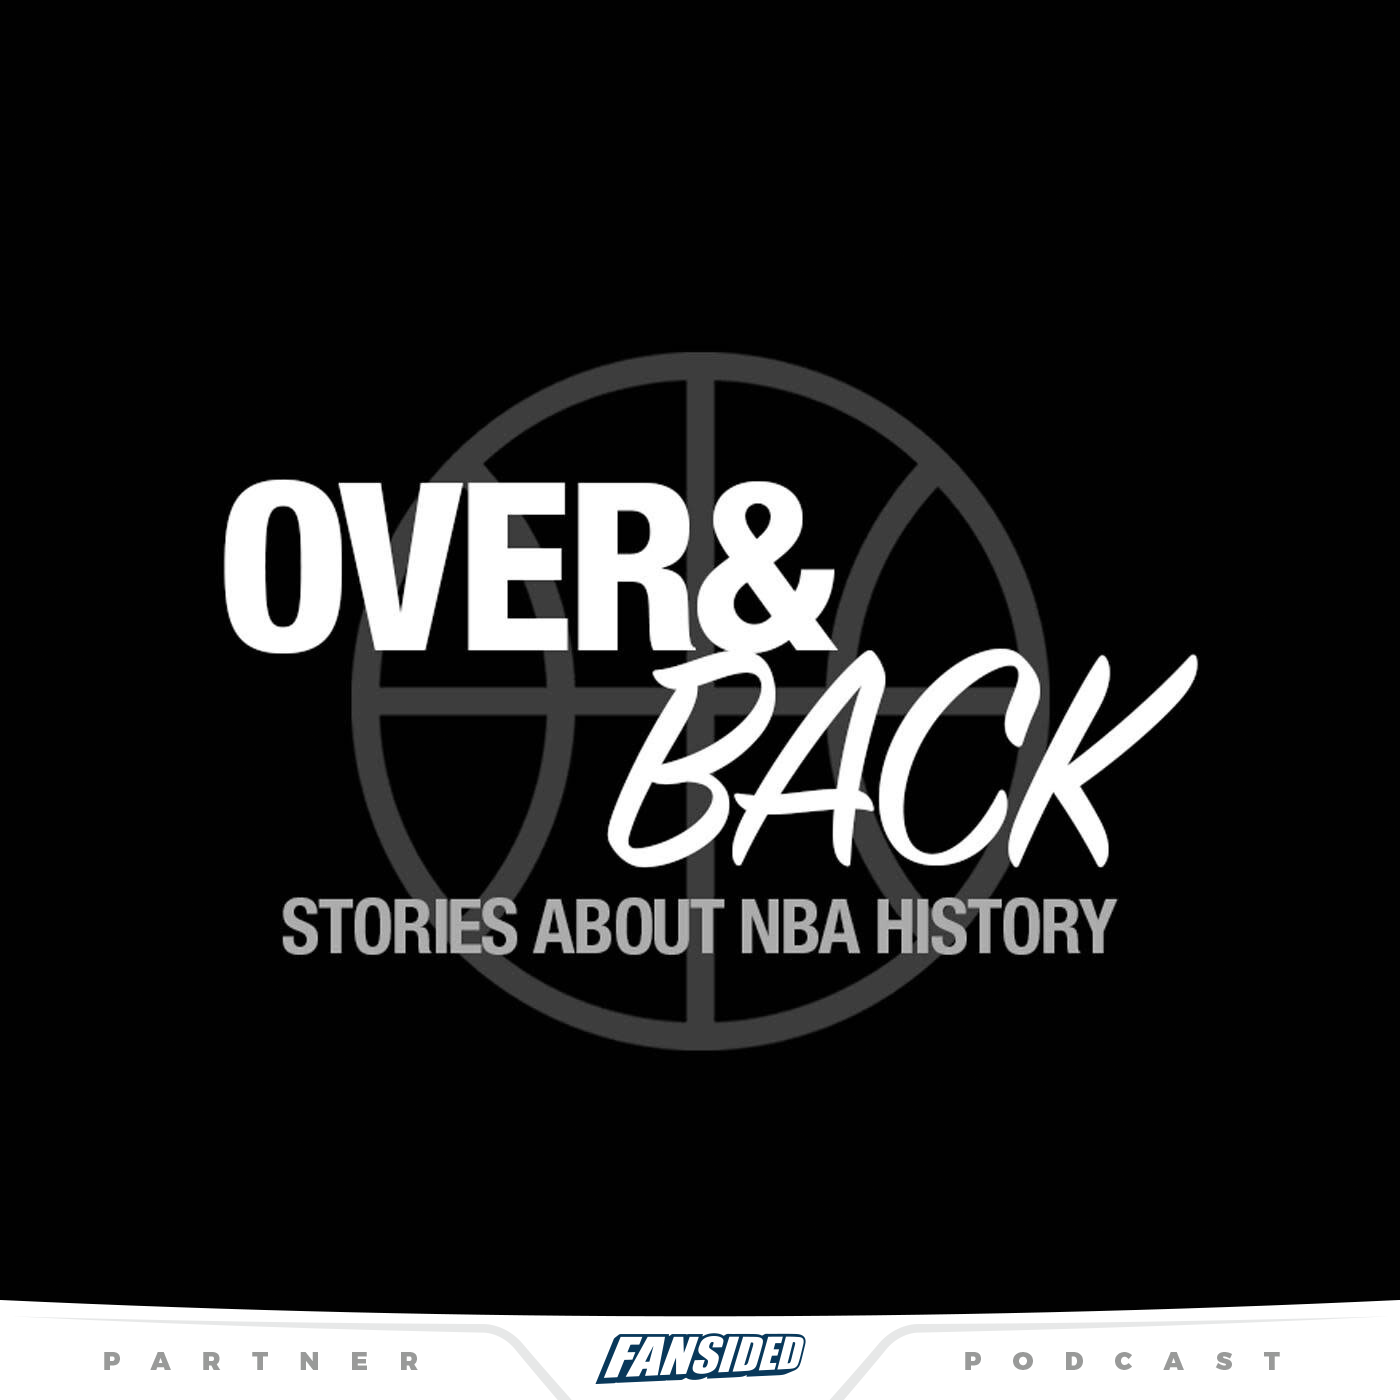 The history of NBA expansion teams